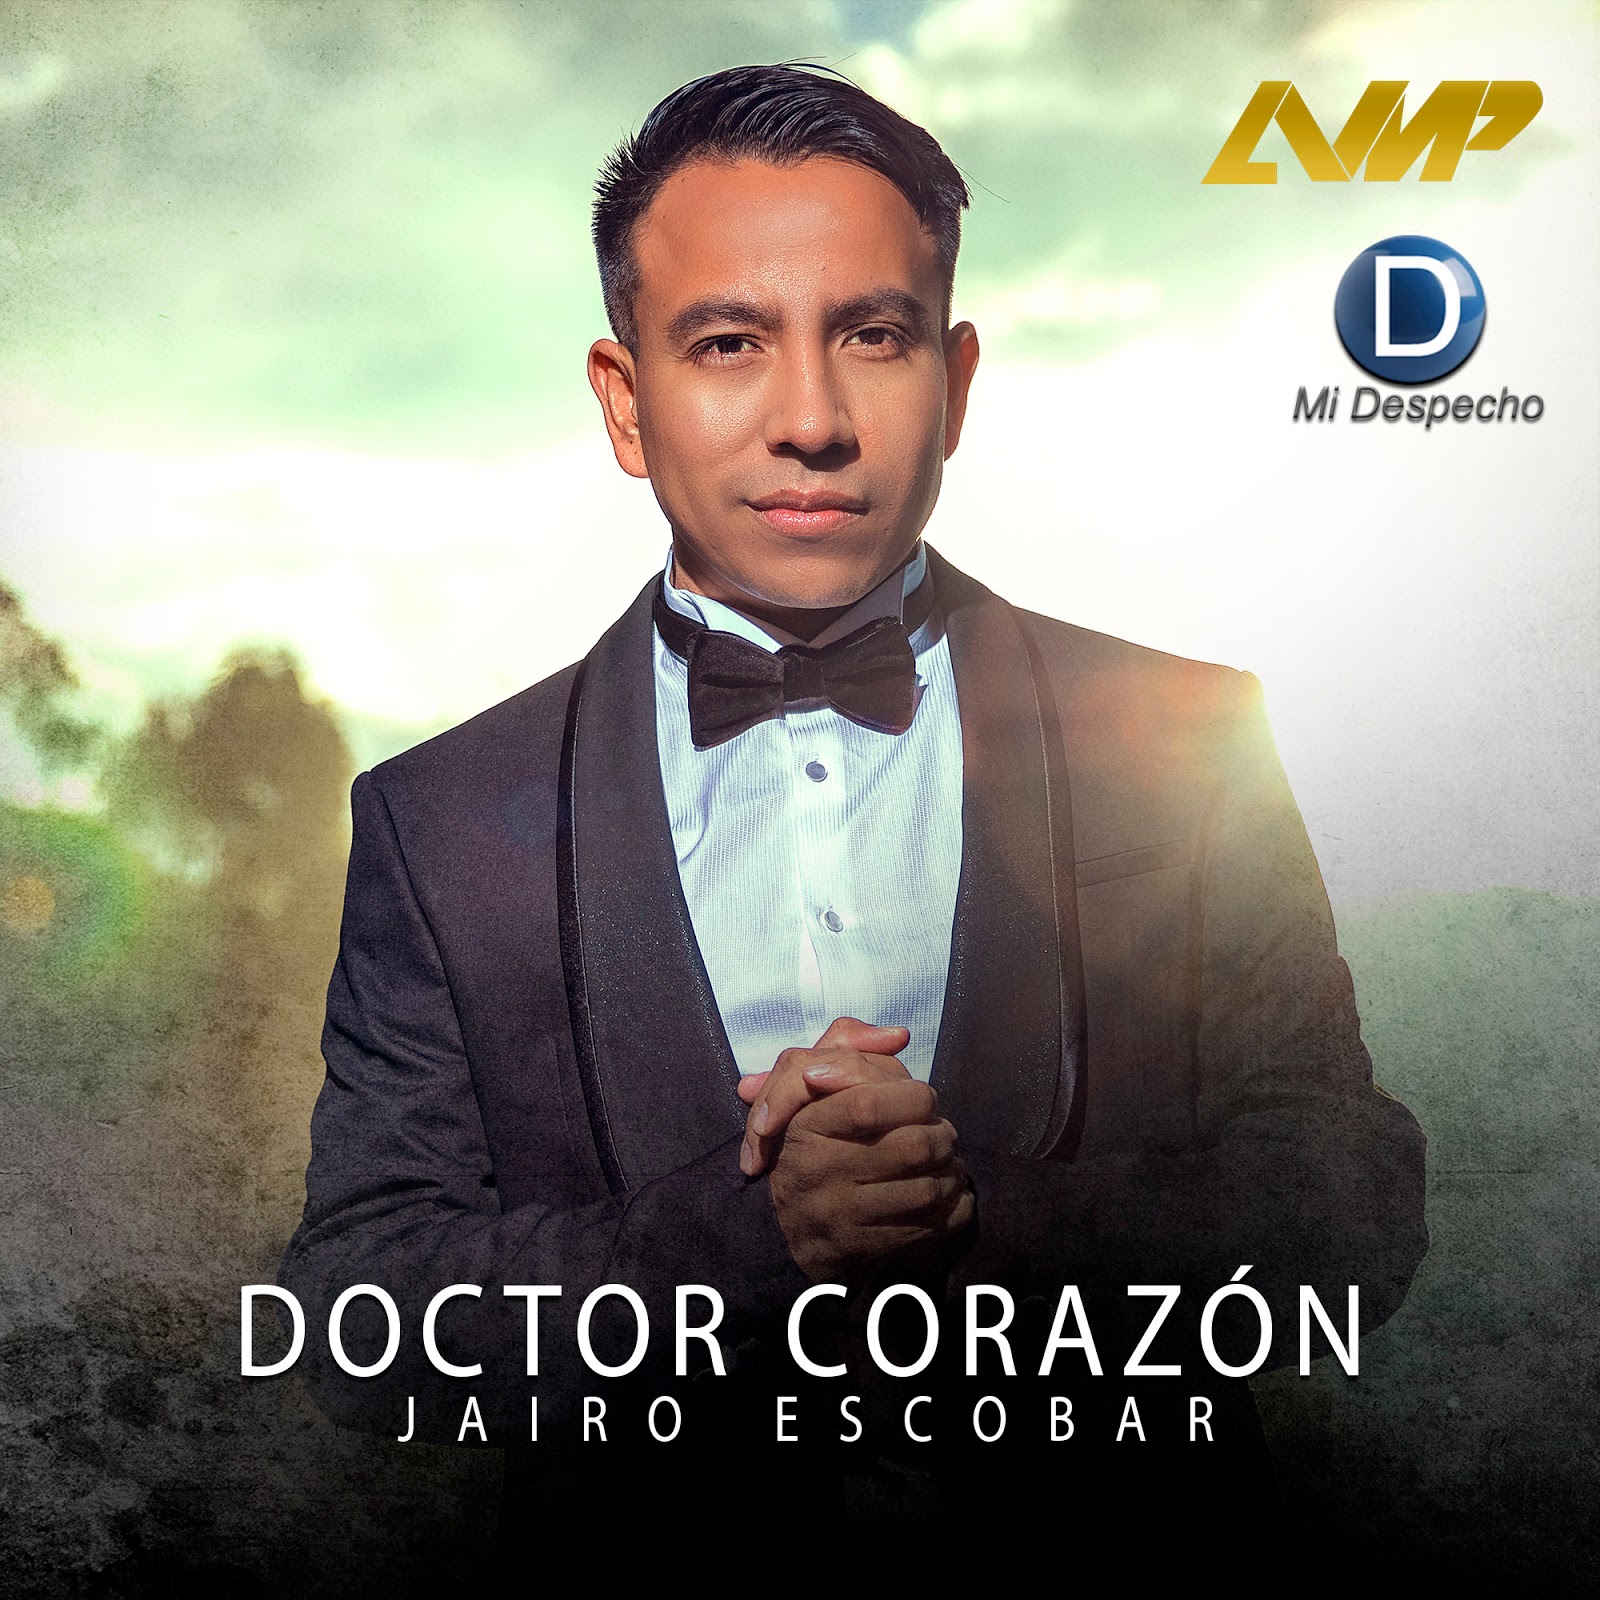 Jairo Escobar Doctor Corazon